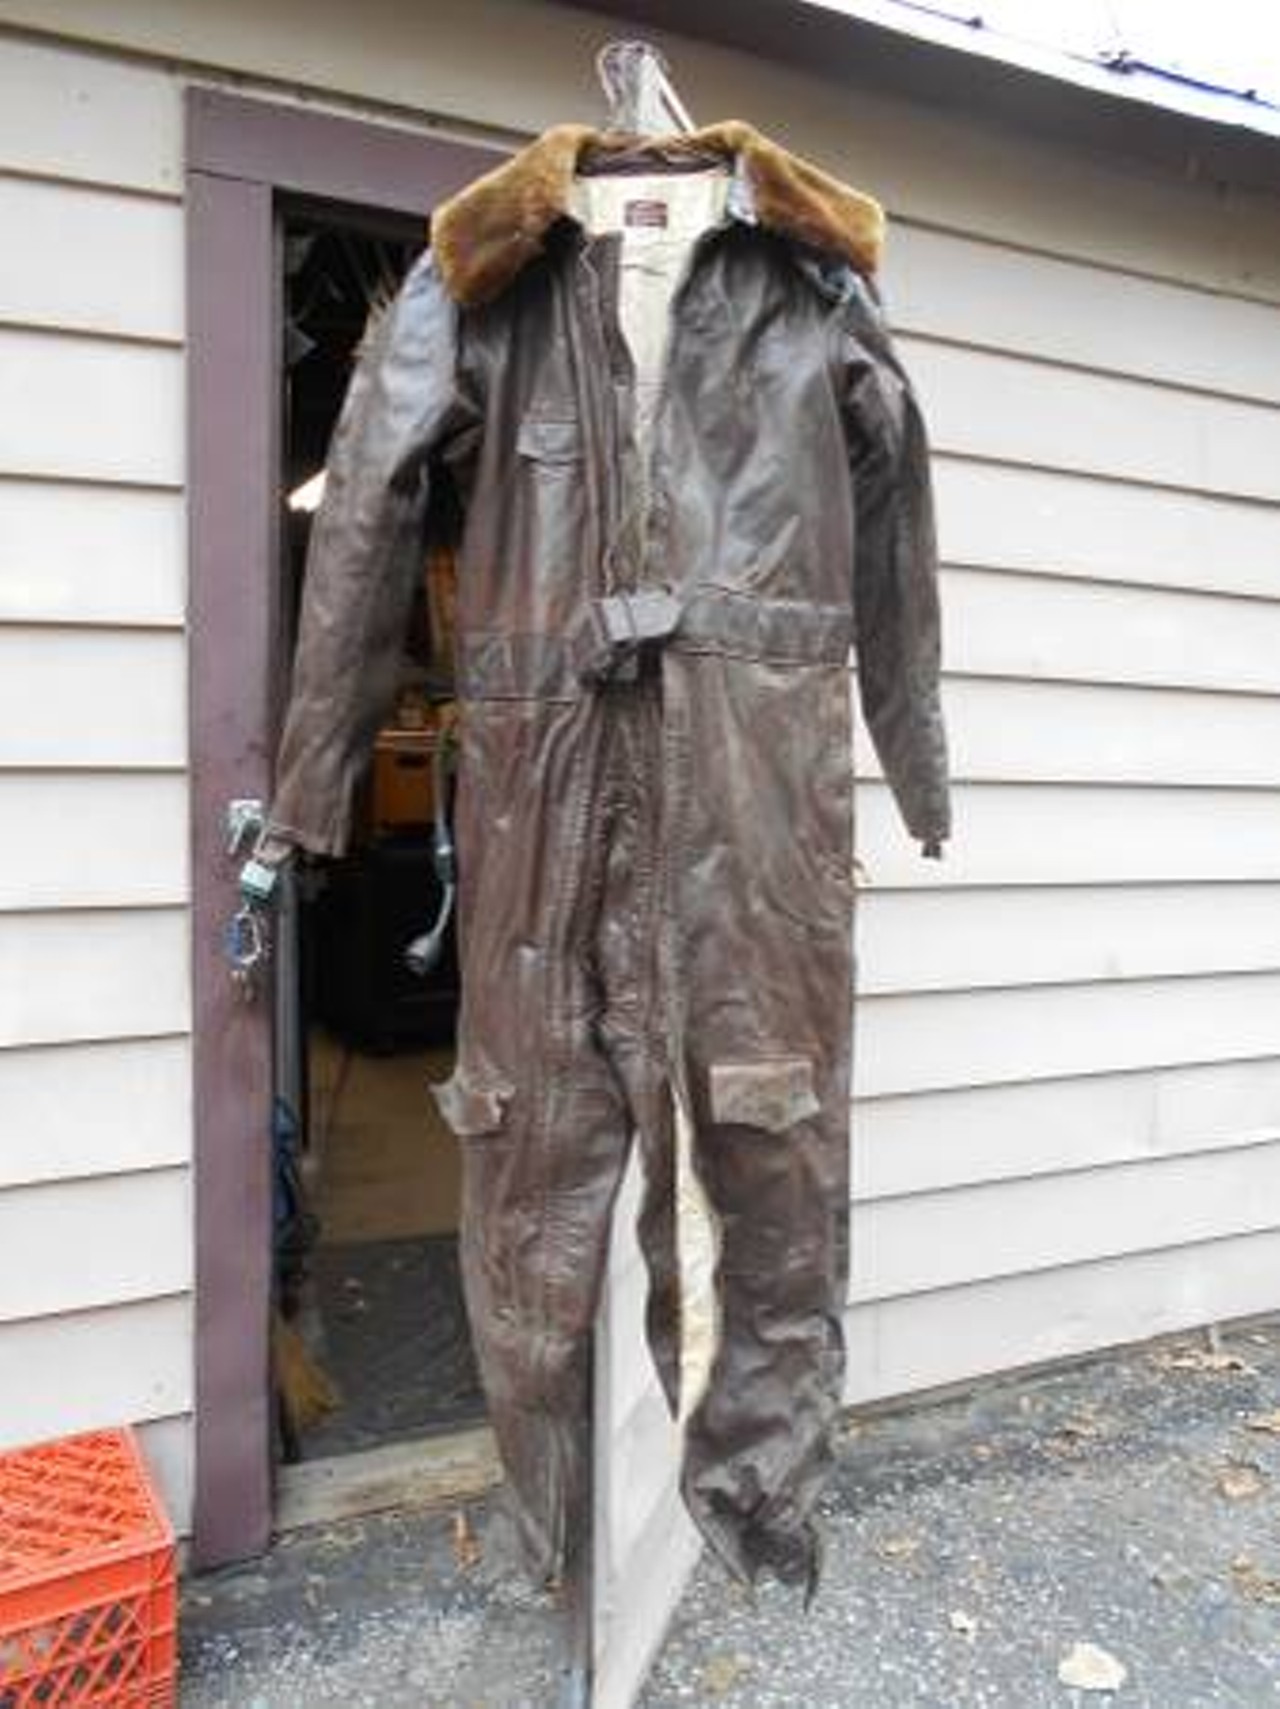 Used leather bombersuit ($500)
One man&#146;s trash is another man&#146;s $500 treasure.
Photo via  Craigslist